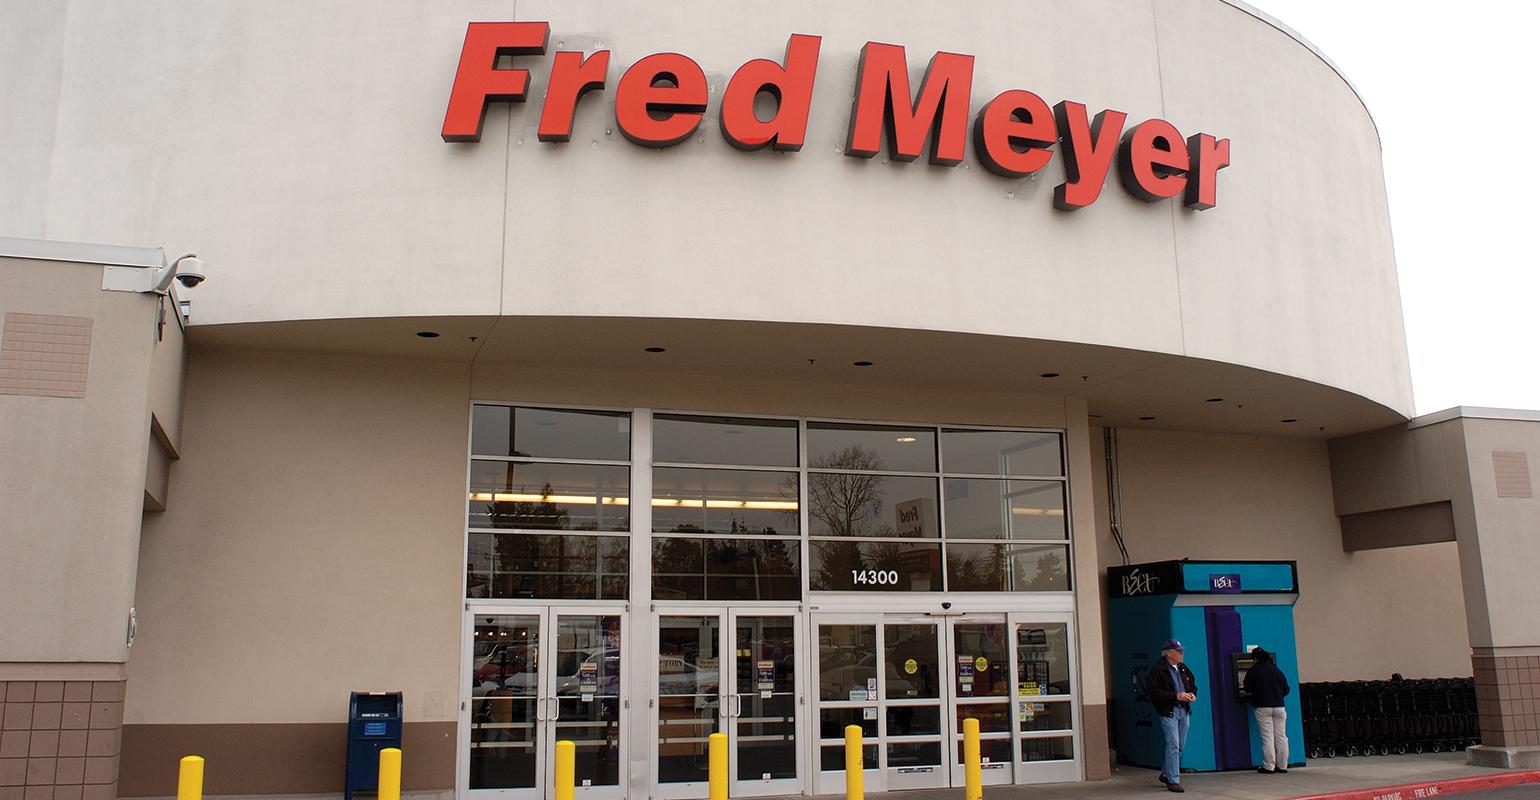 Kroger testing new strategies at Fred Meyer | Supermarket News